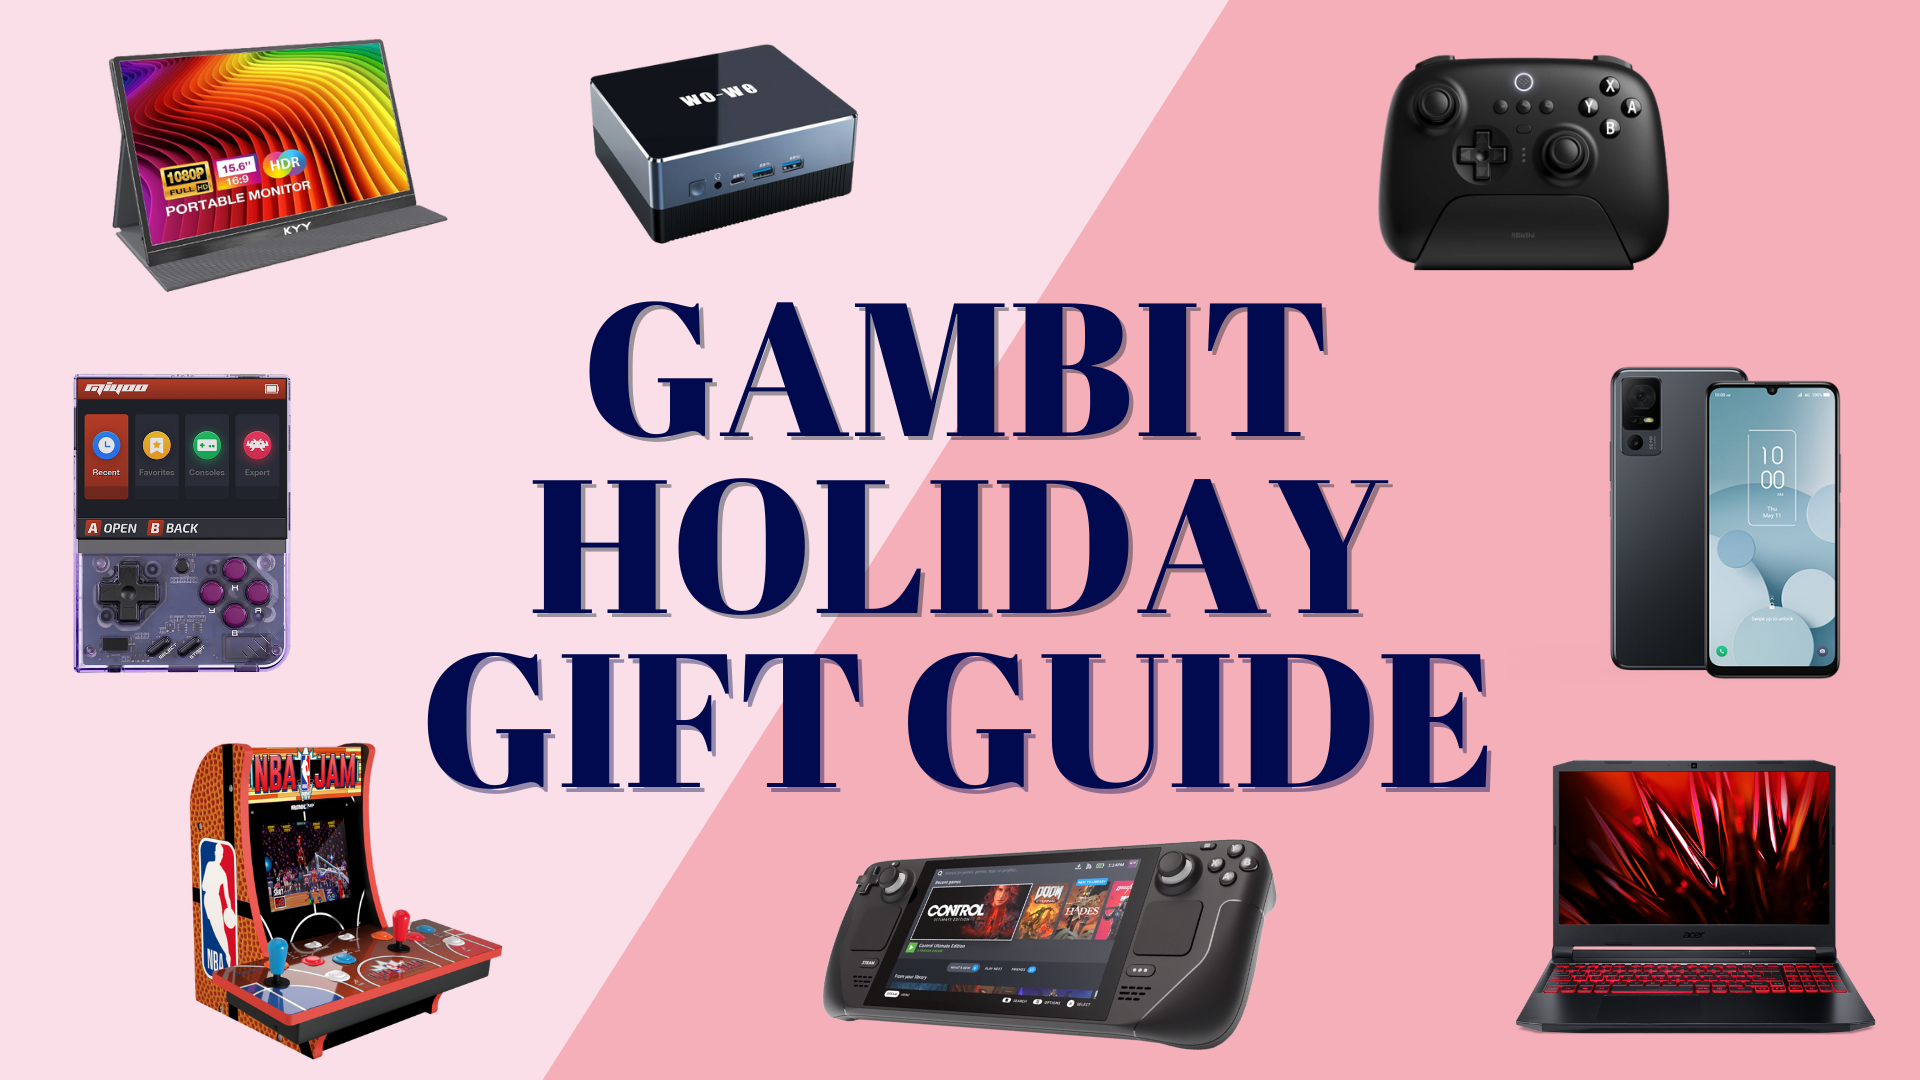 GAMBIT Gift Guide